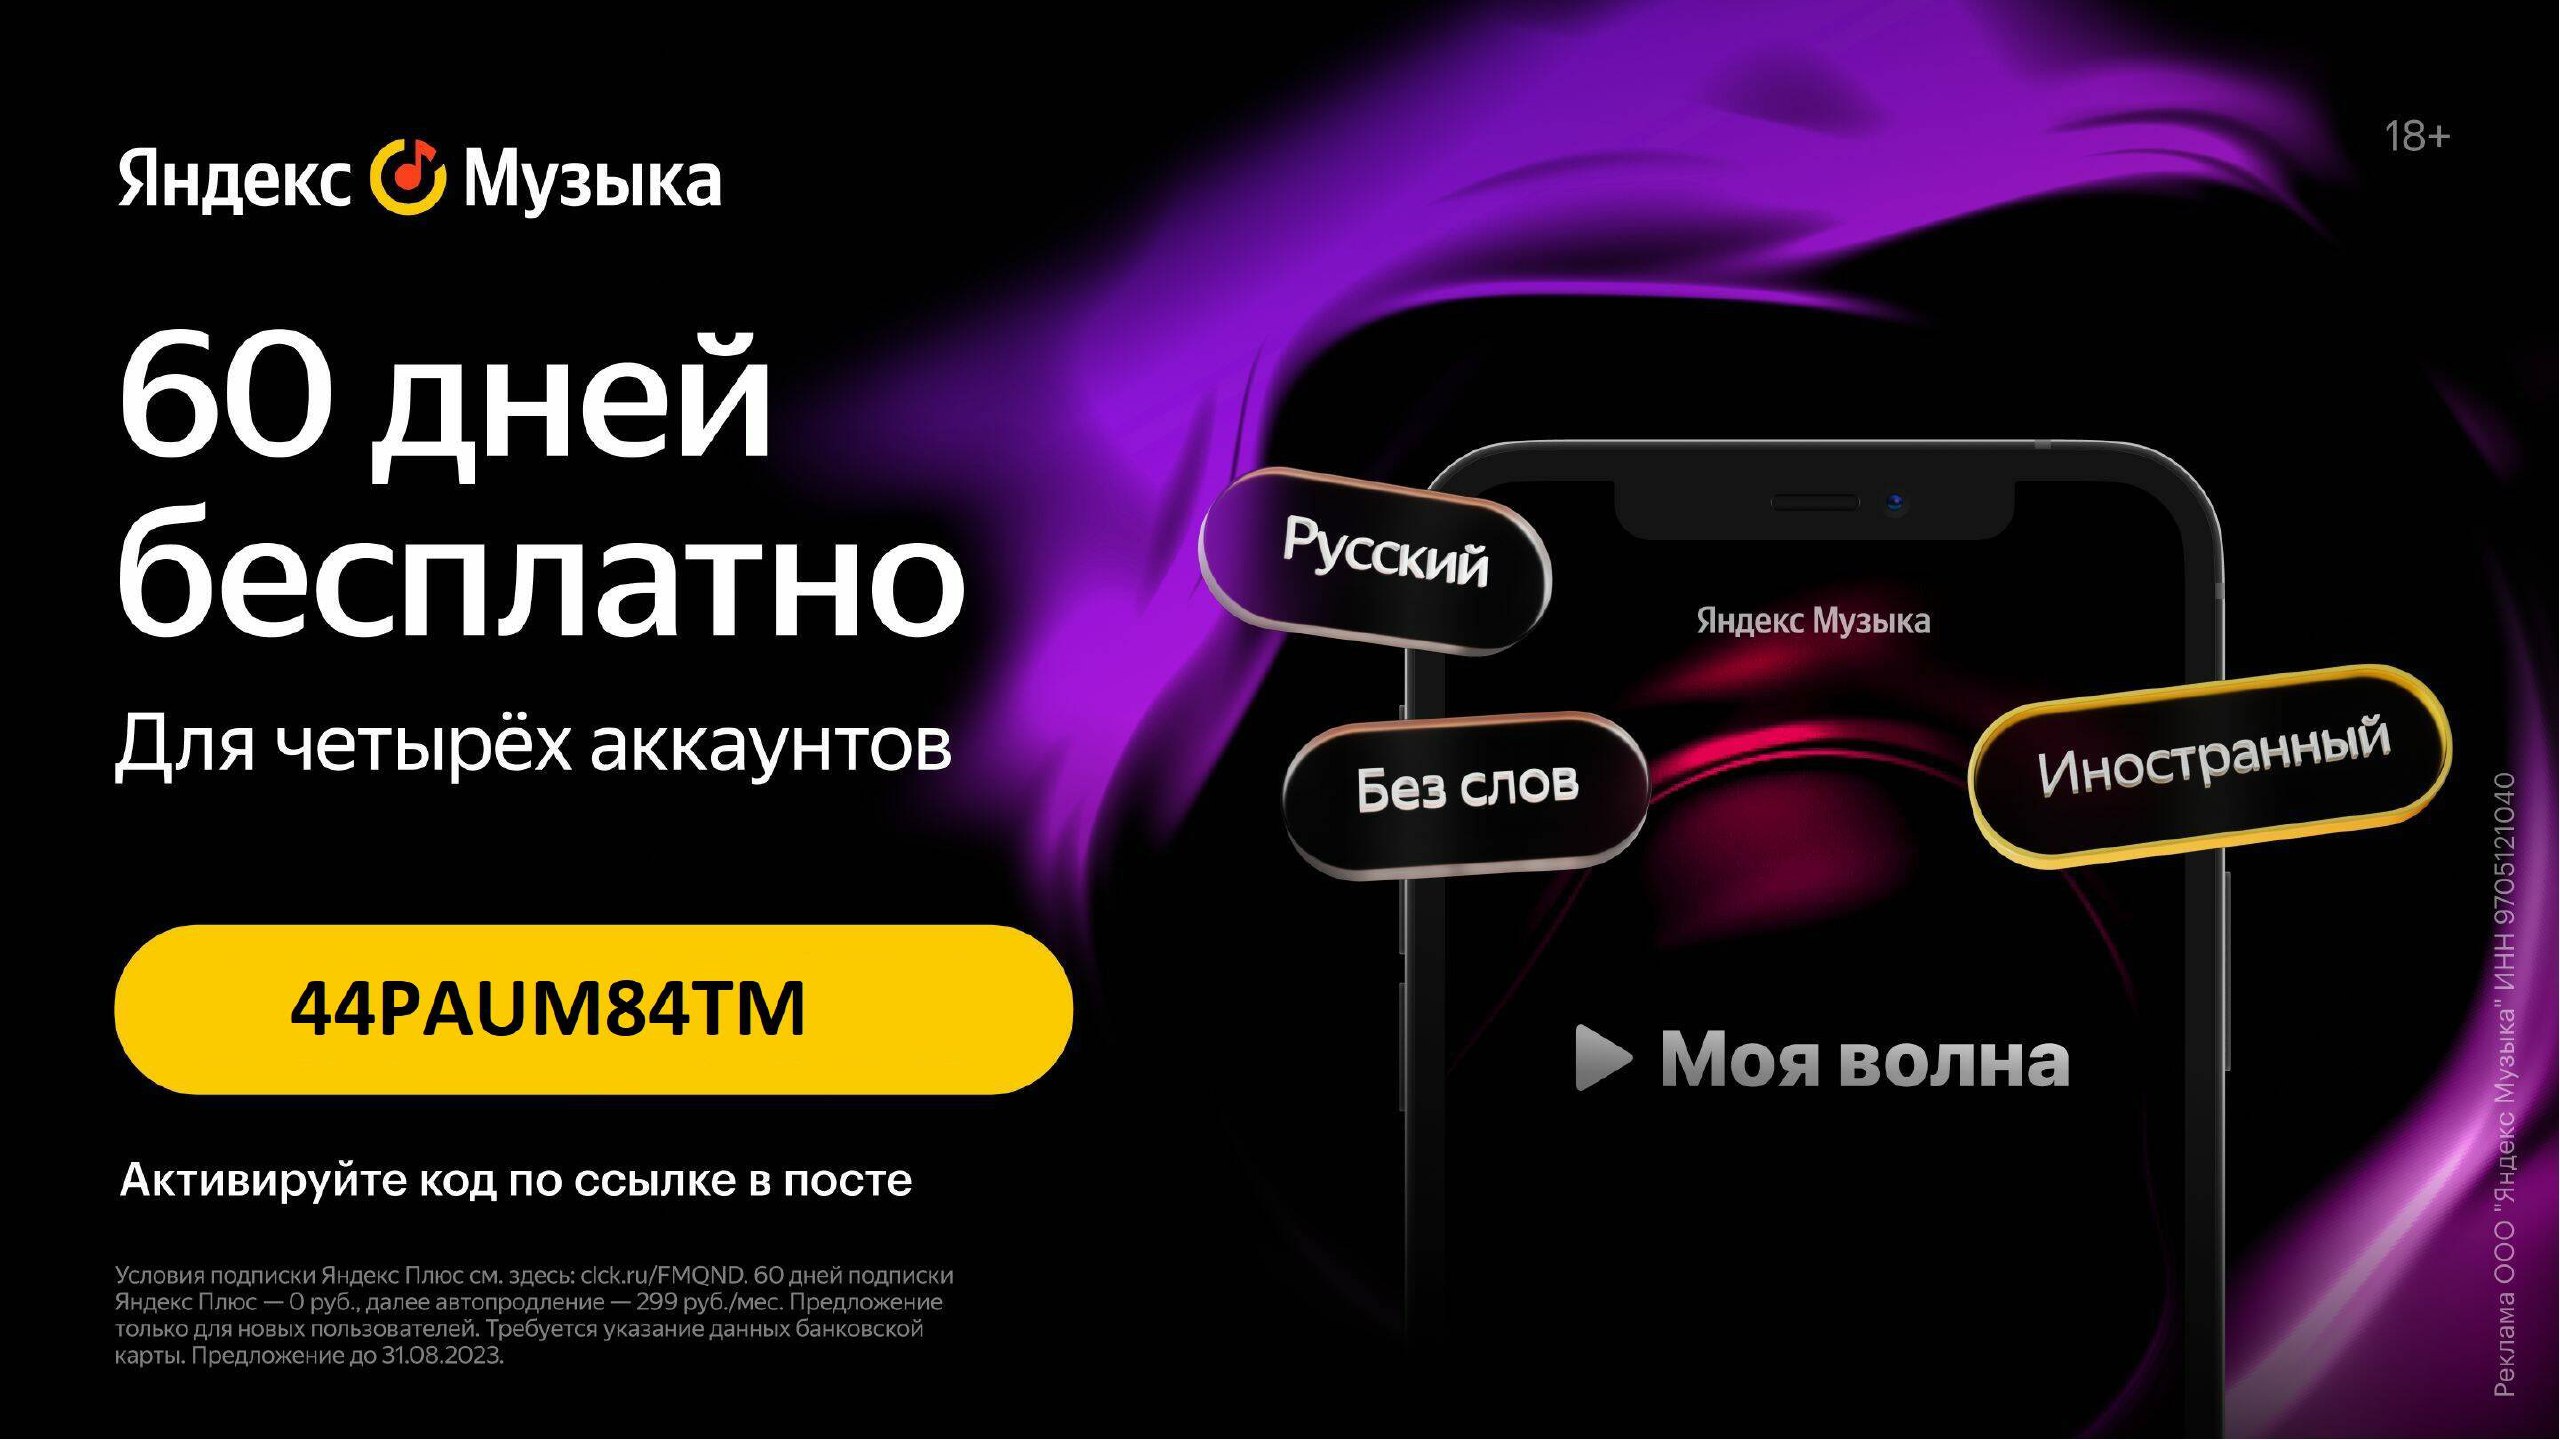 Яндекс Музыка 60 дней бесплатно